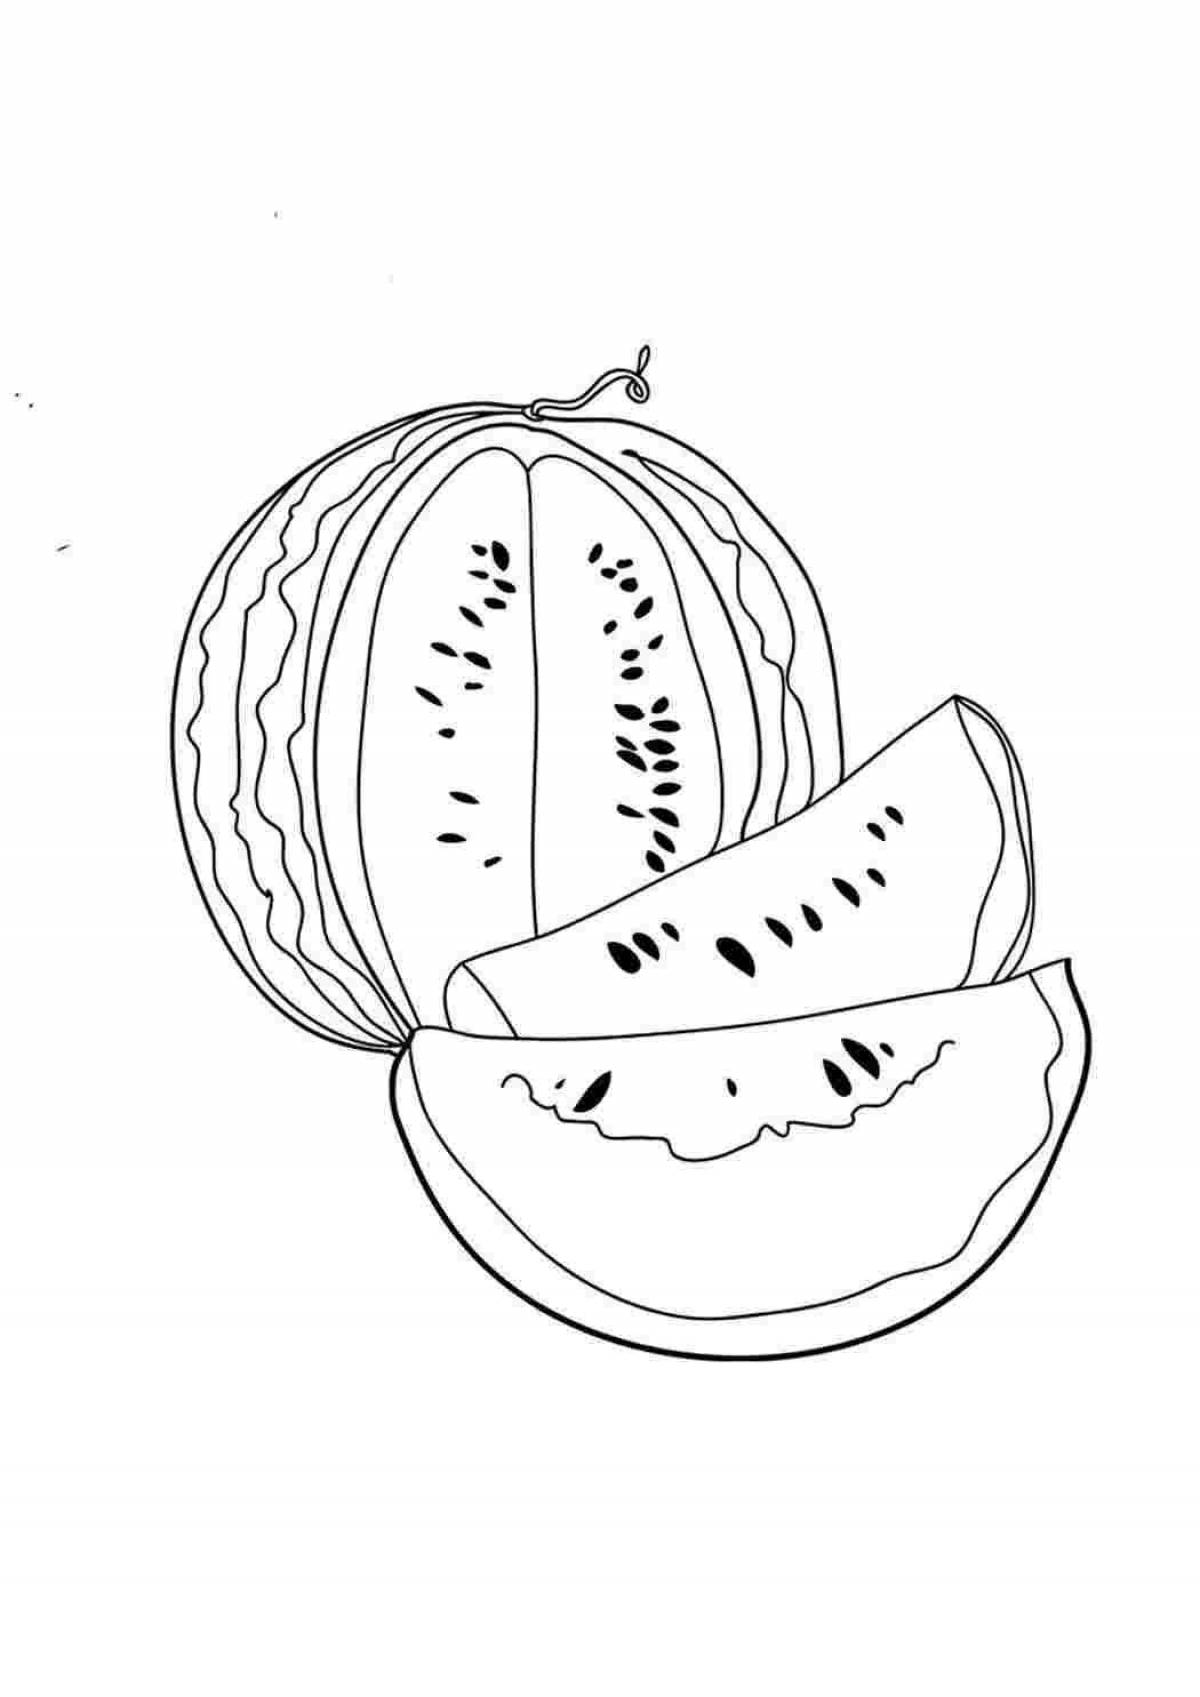 Creative watermelon drawing